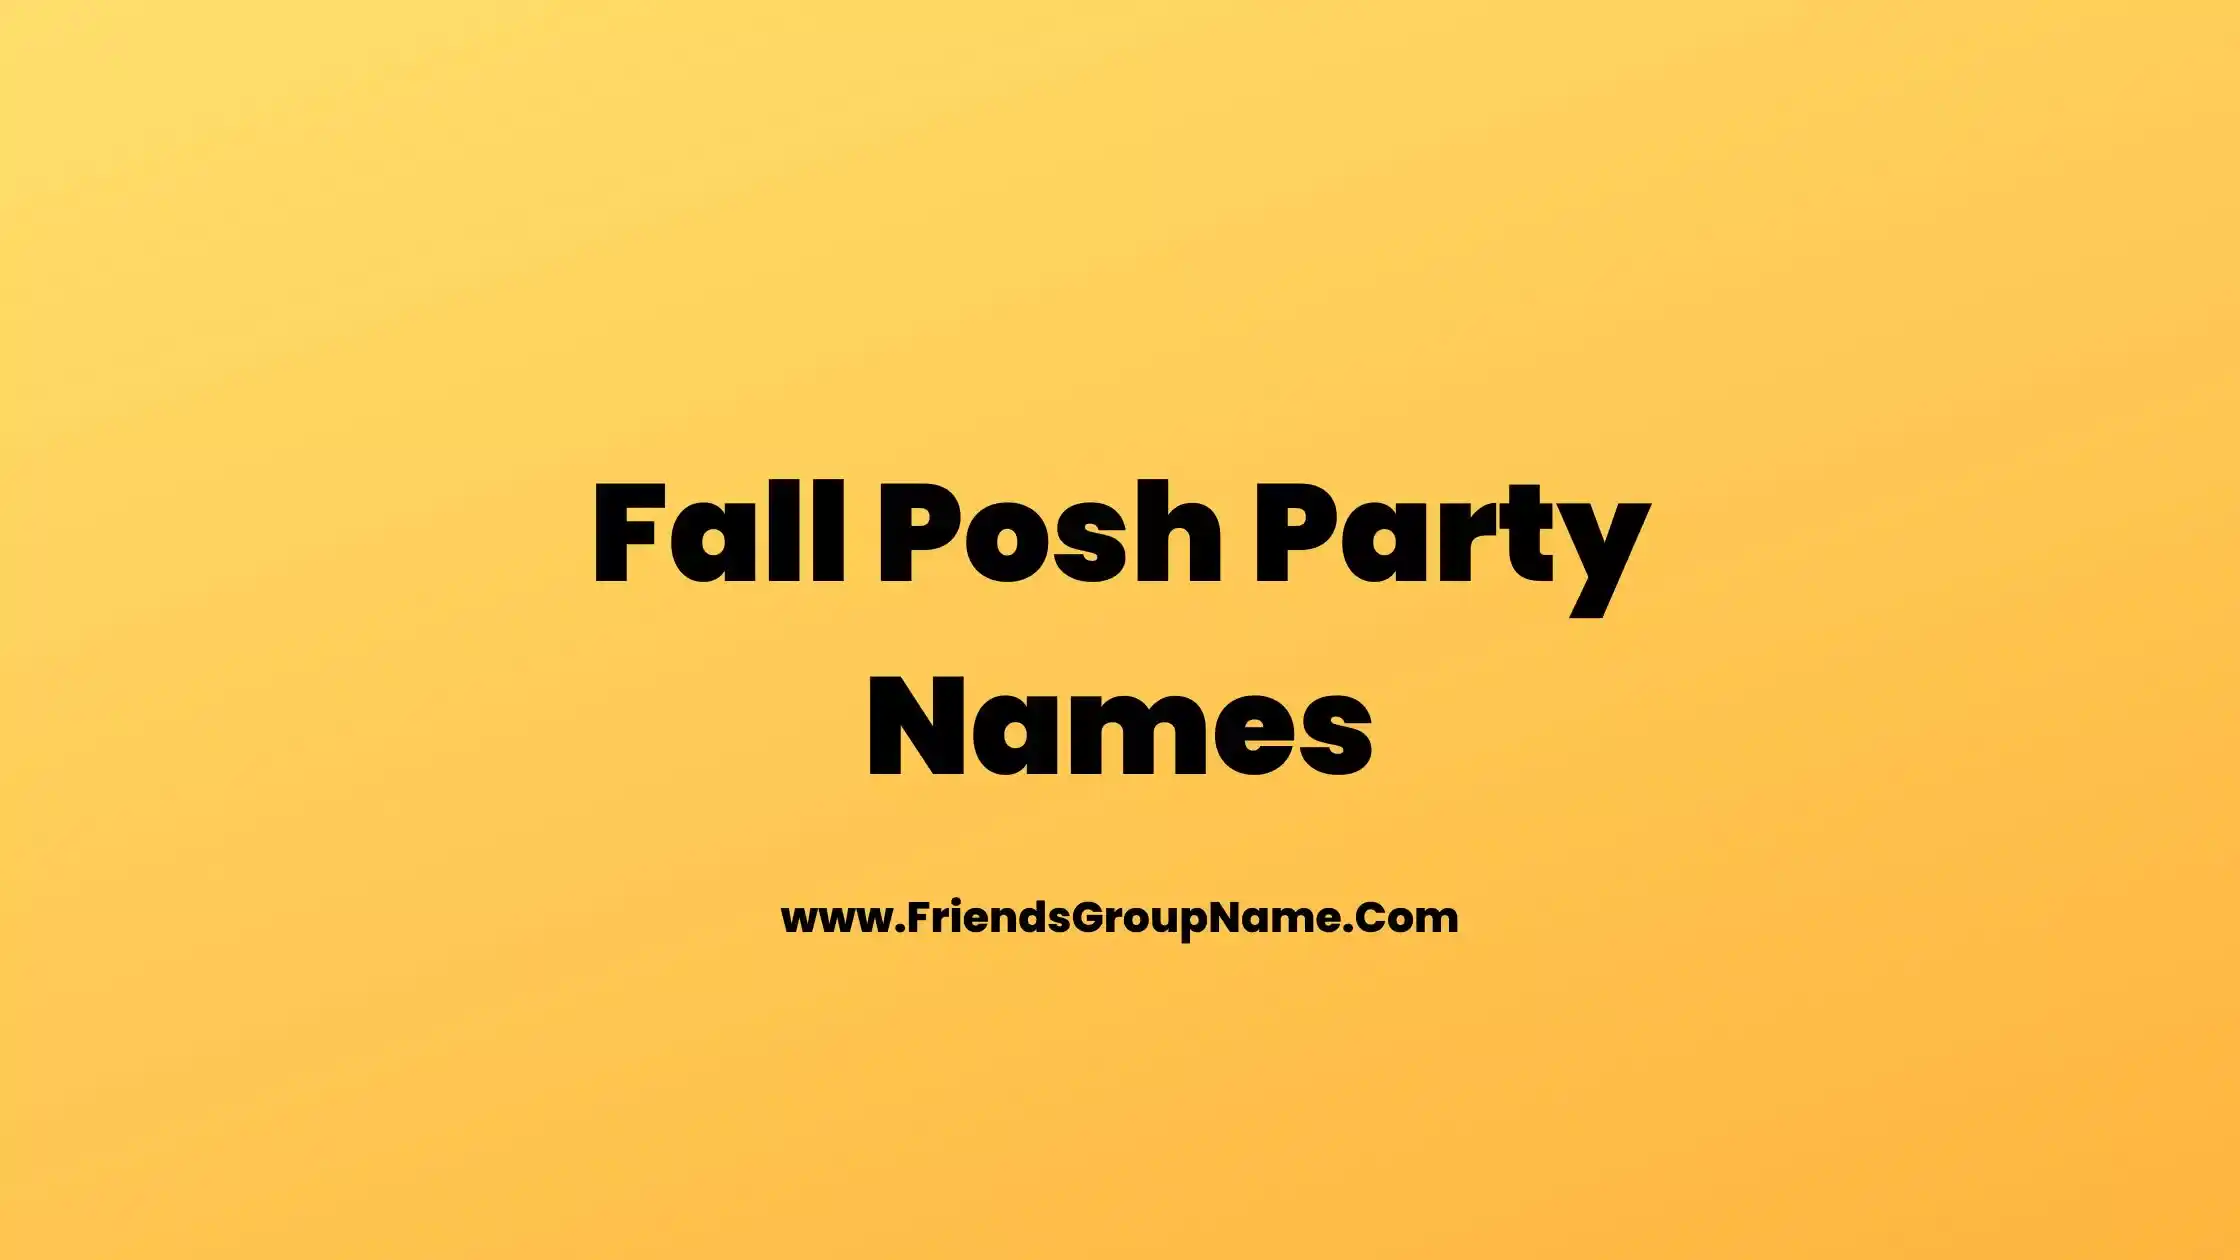 Fall Posh Party Names